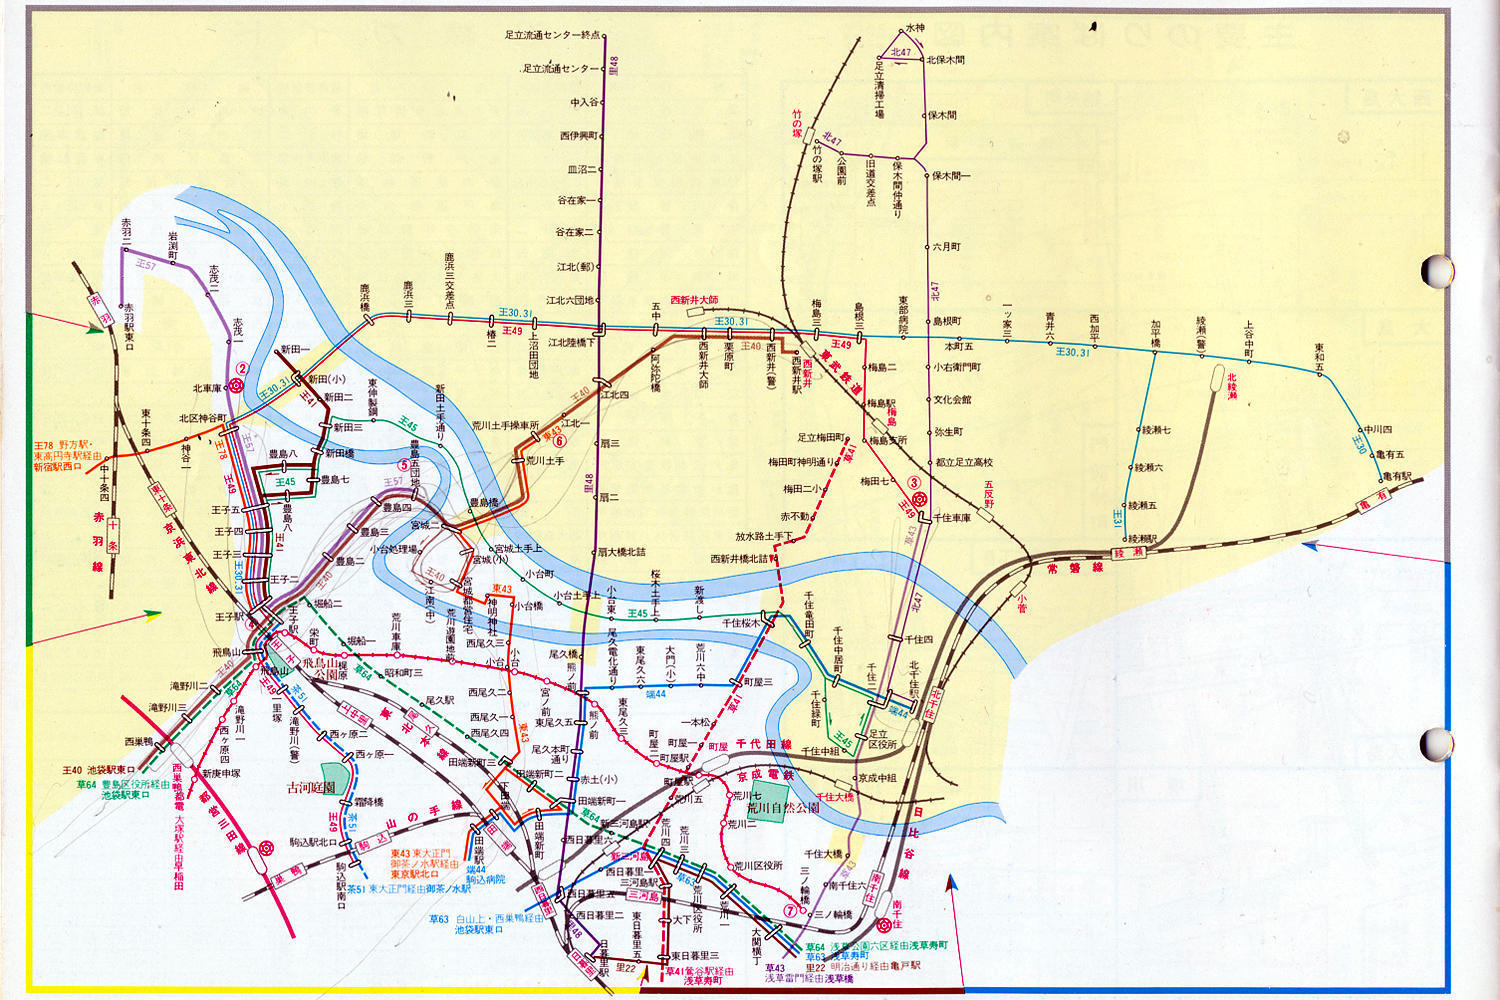 r1【バス路線地図】東京都区部 昭和56年[全路線 停留所 系統番号入 